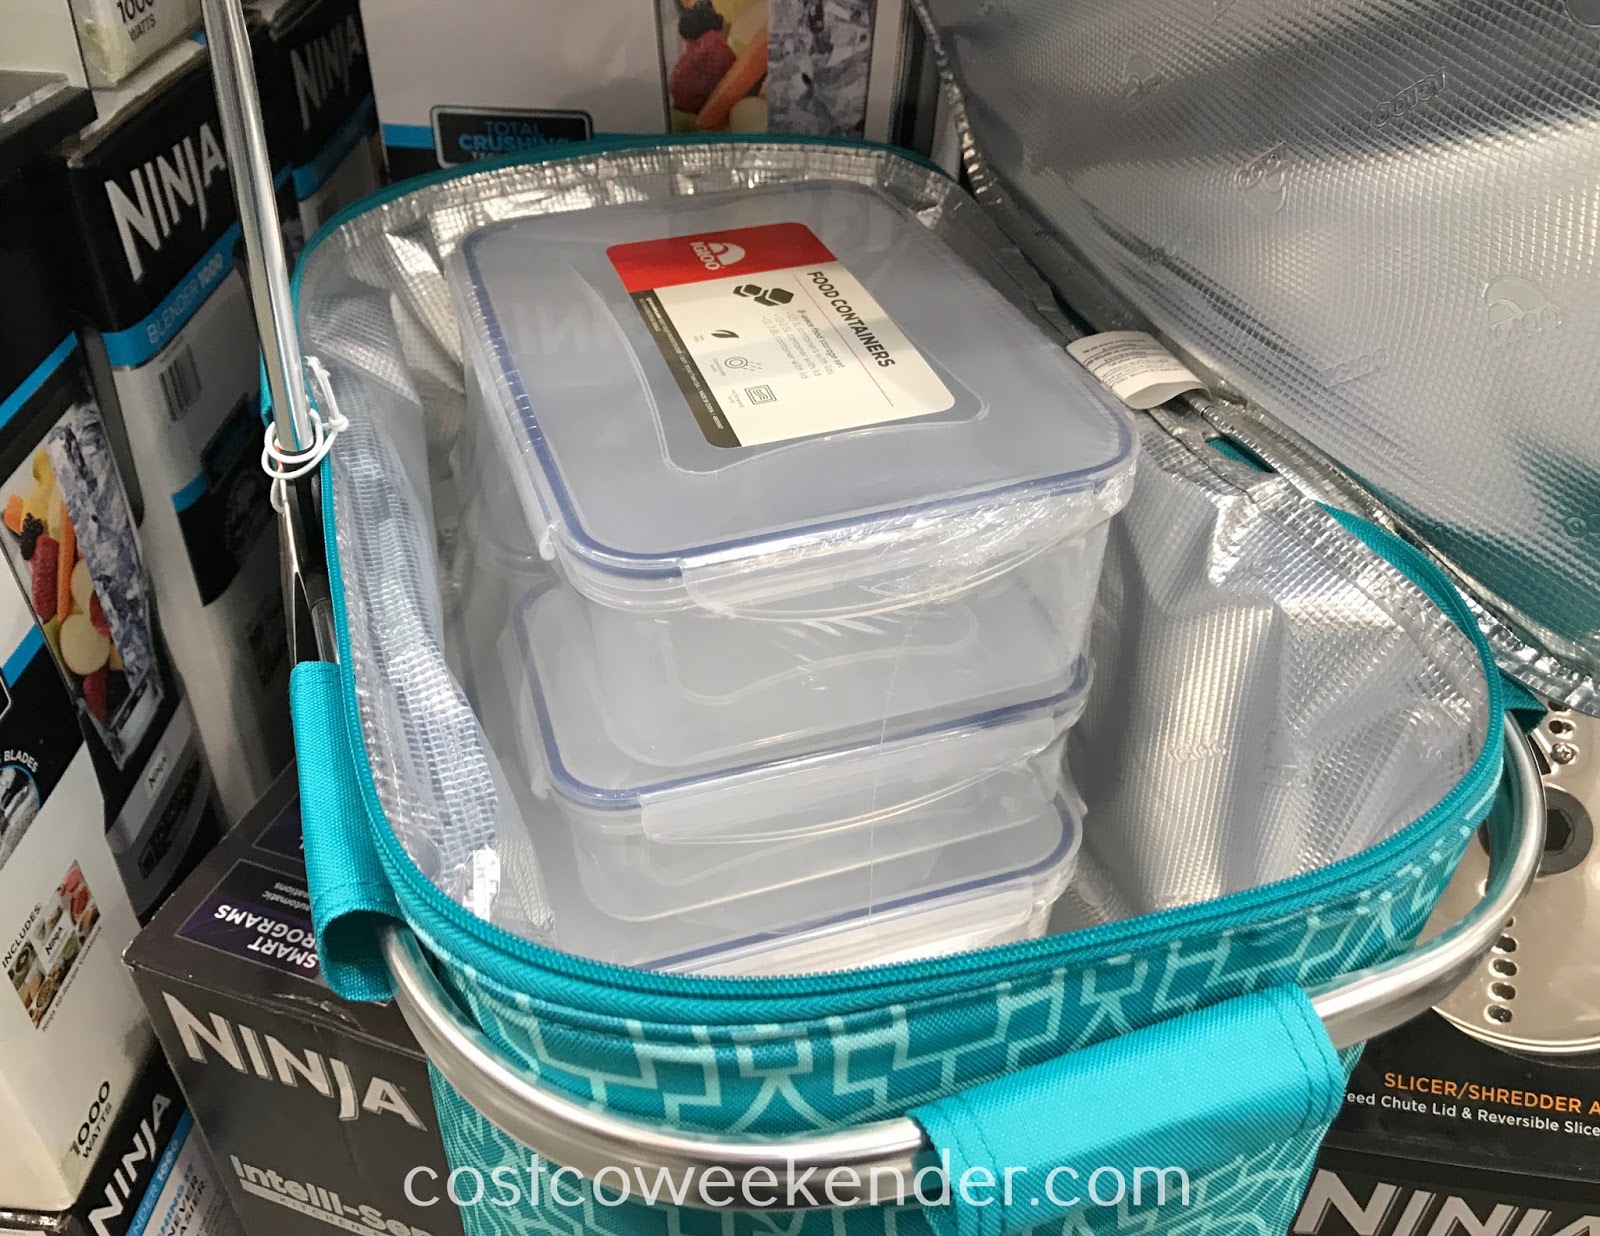 Igloo Party Basket With 8 Piece Food Storage Set Costco Weekender